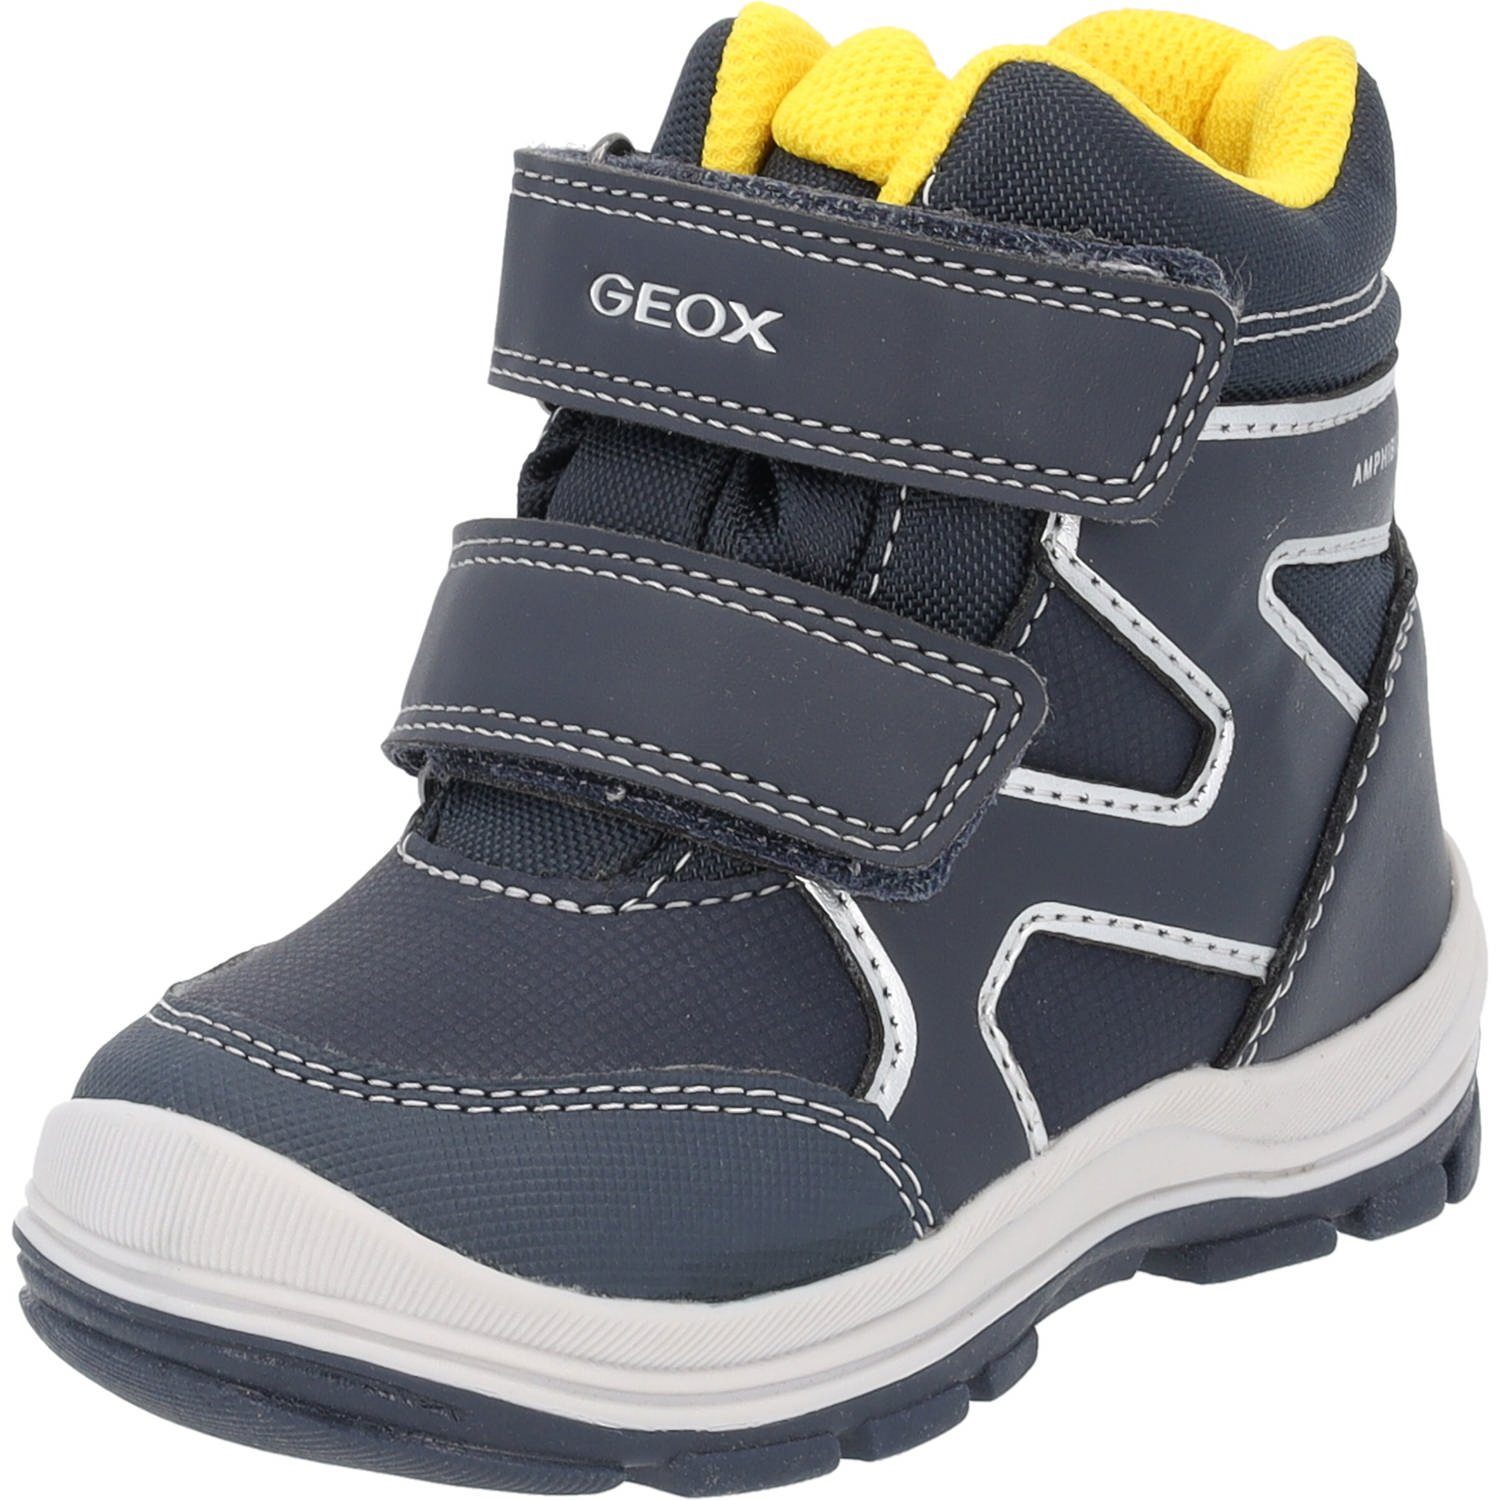 Geox Geox B263VD Stiefel (07101986) navy/yellow